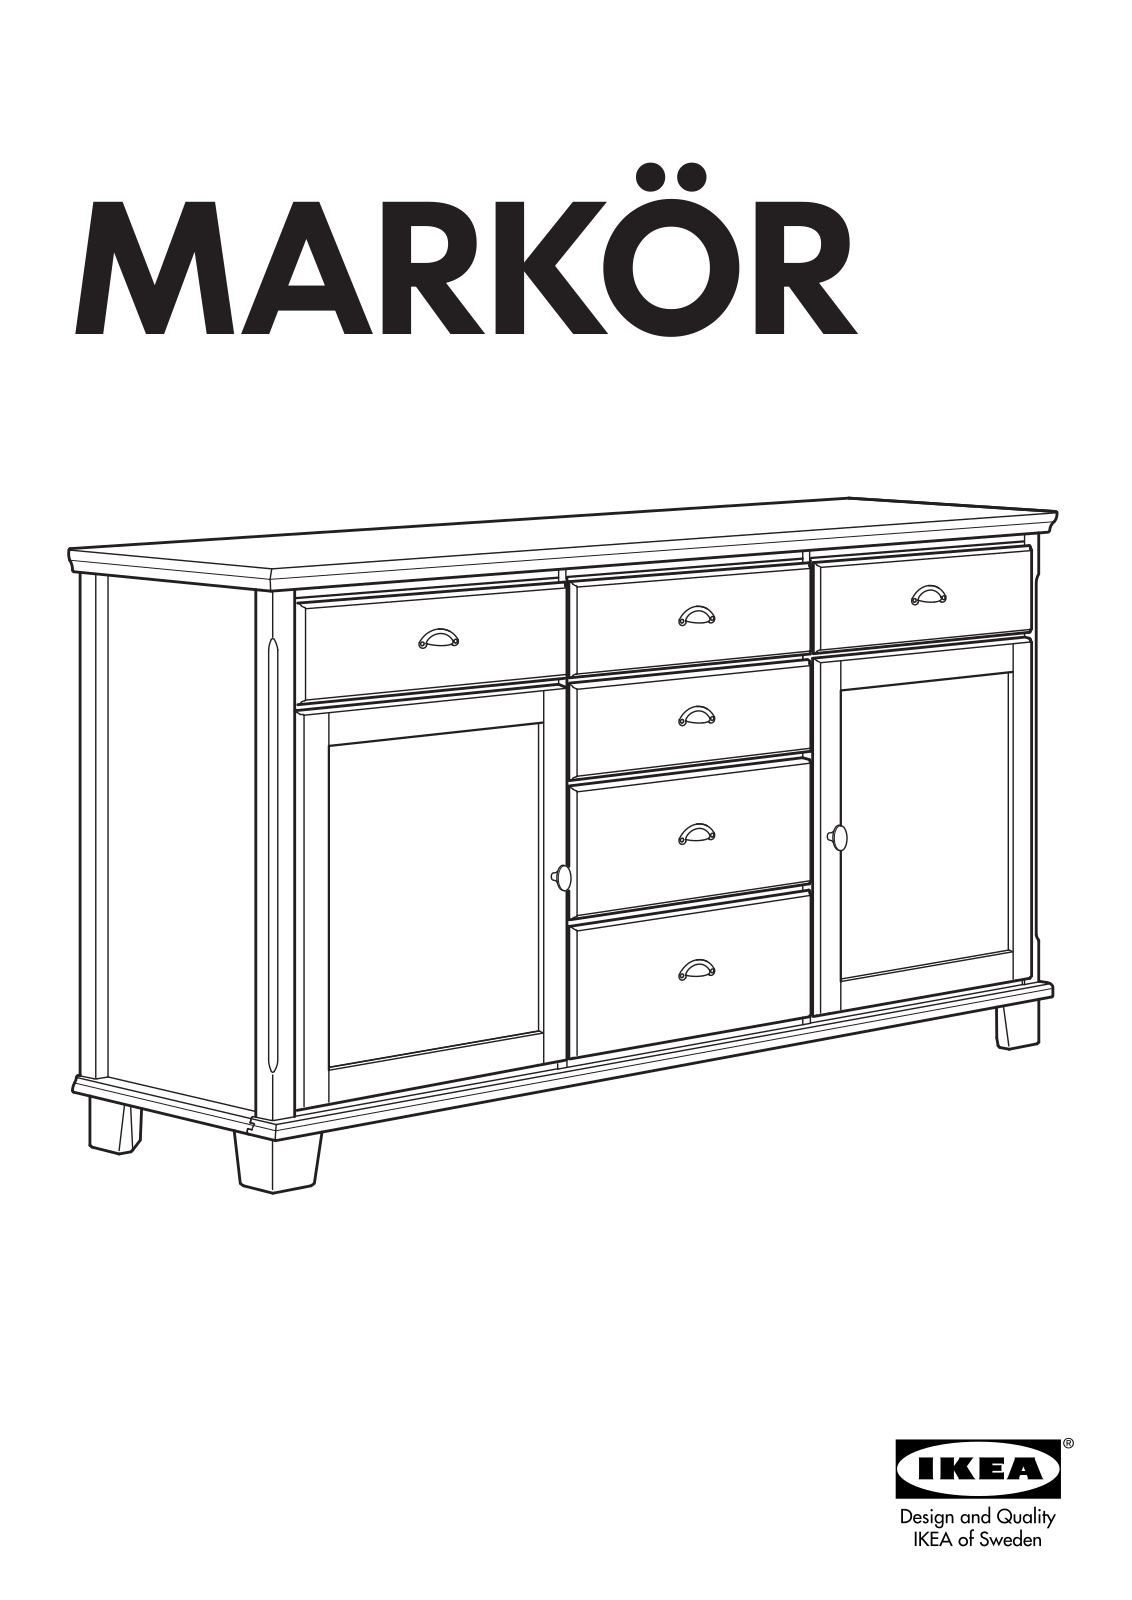 IKEA MARKÖR BUFFET User Manual